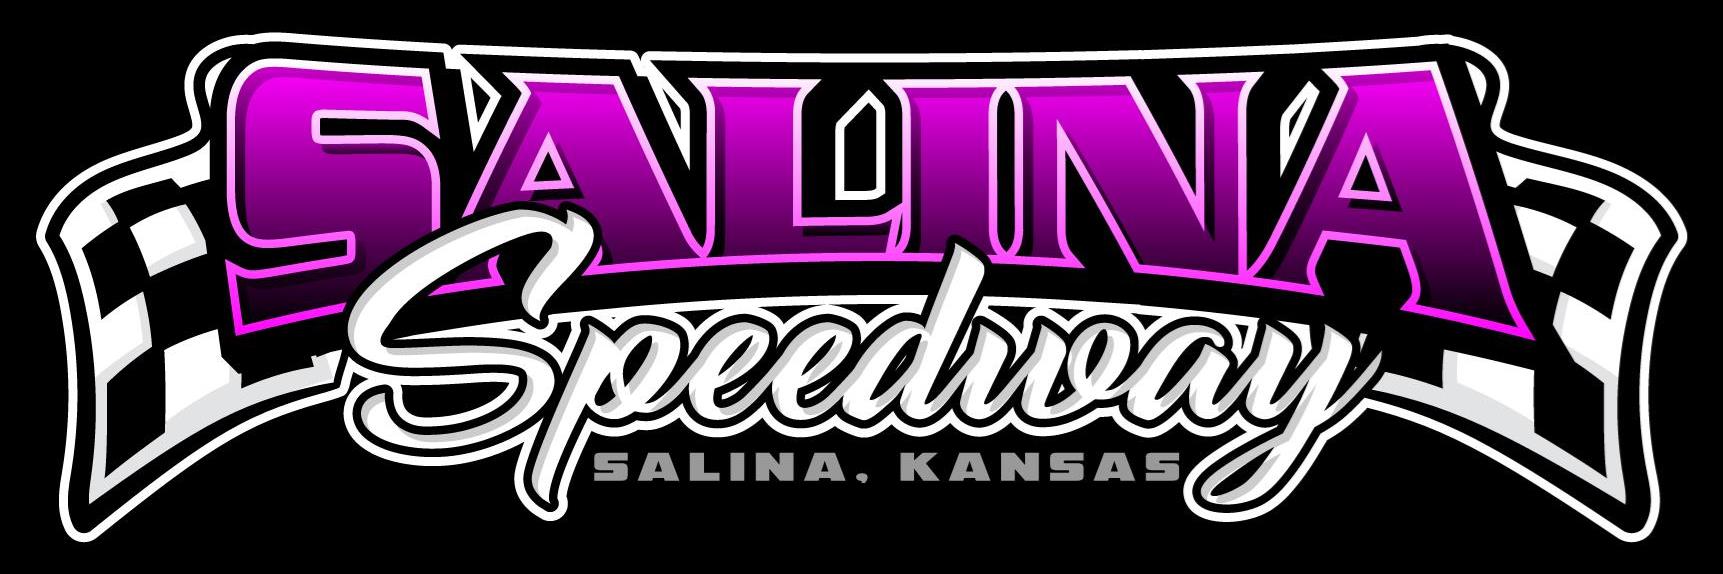 9/25/2020 - Salina Speedway